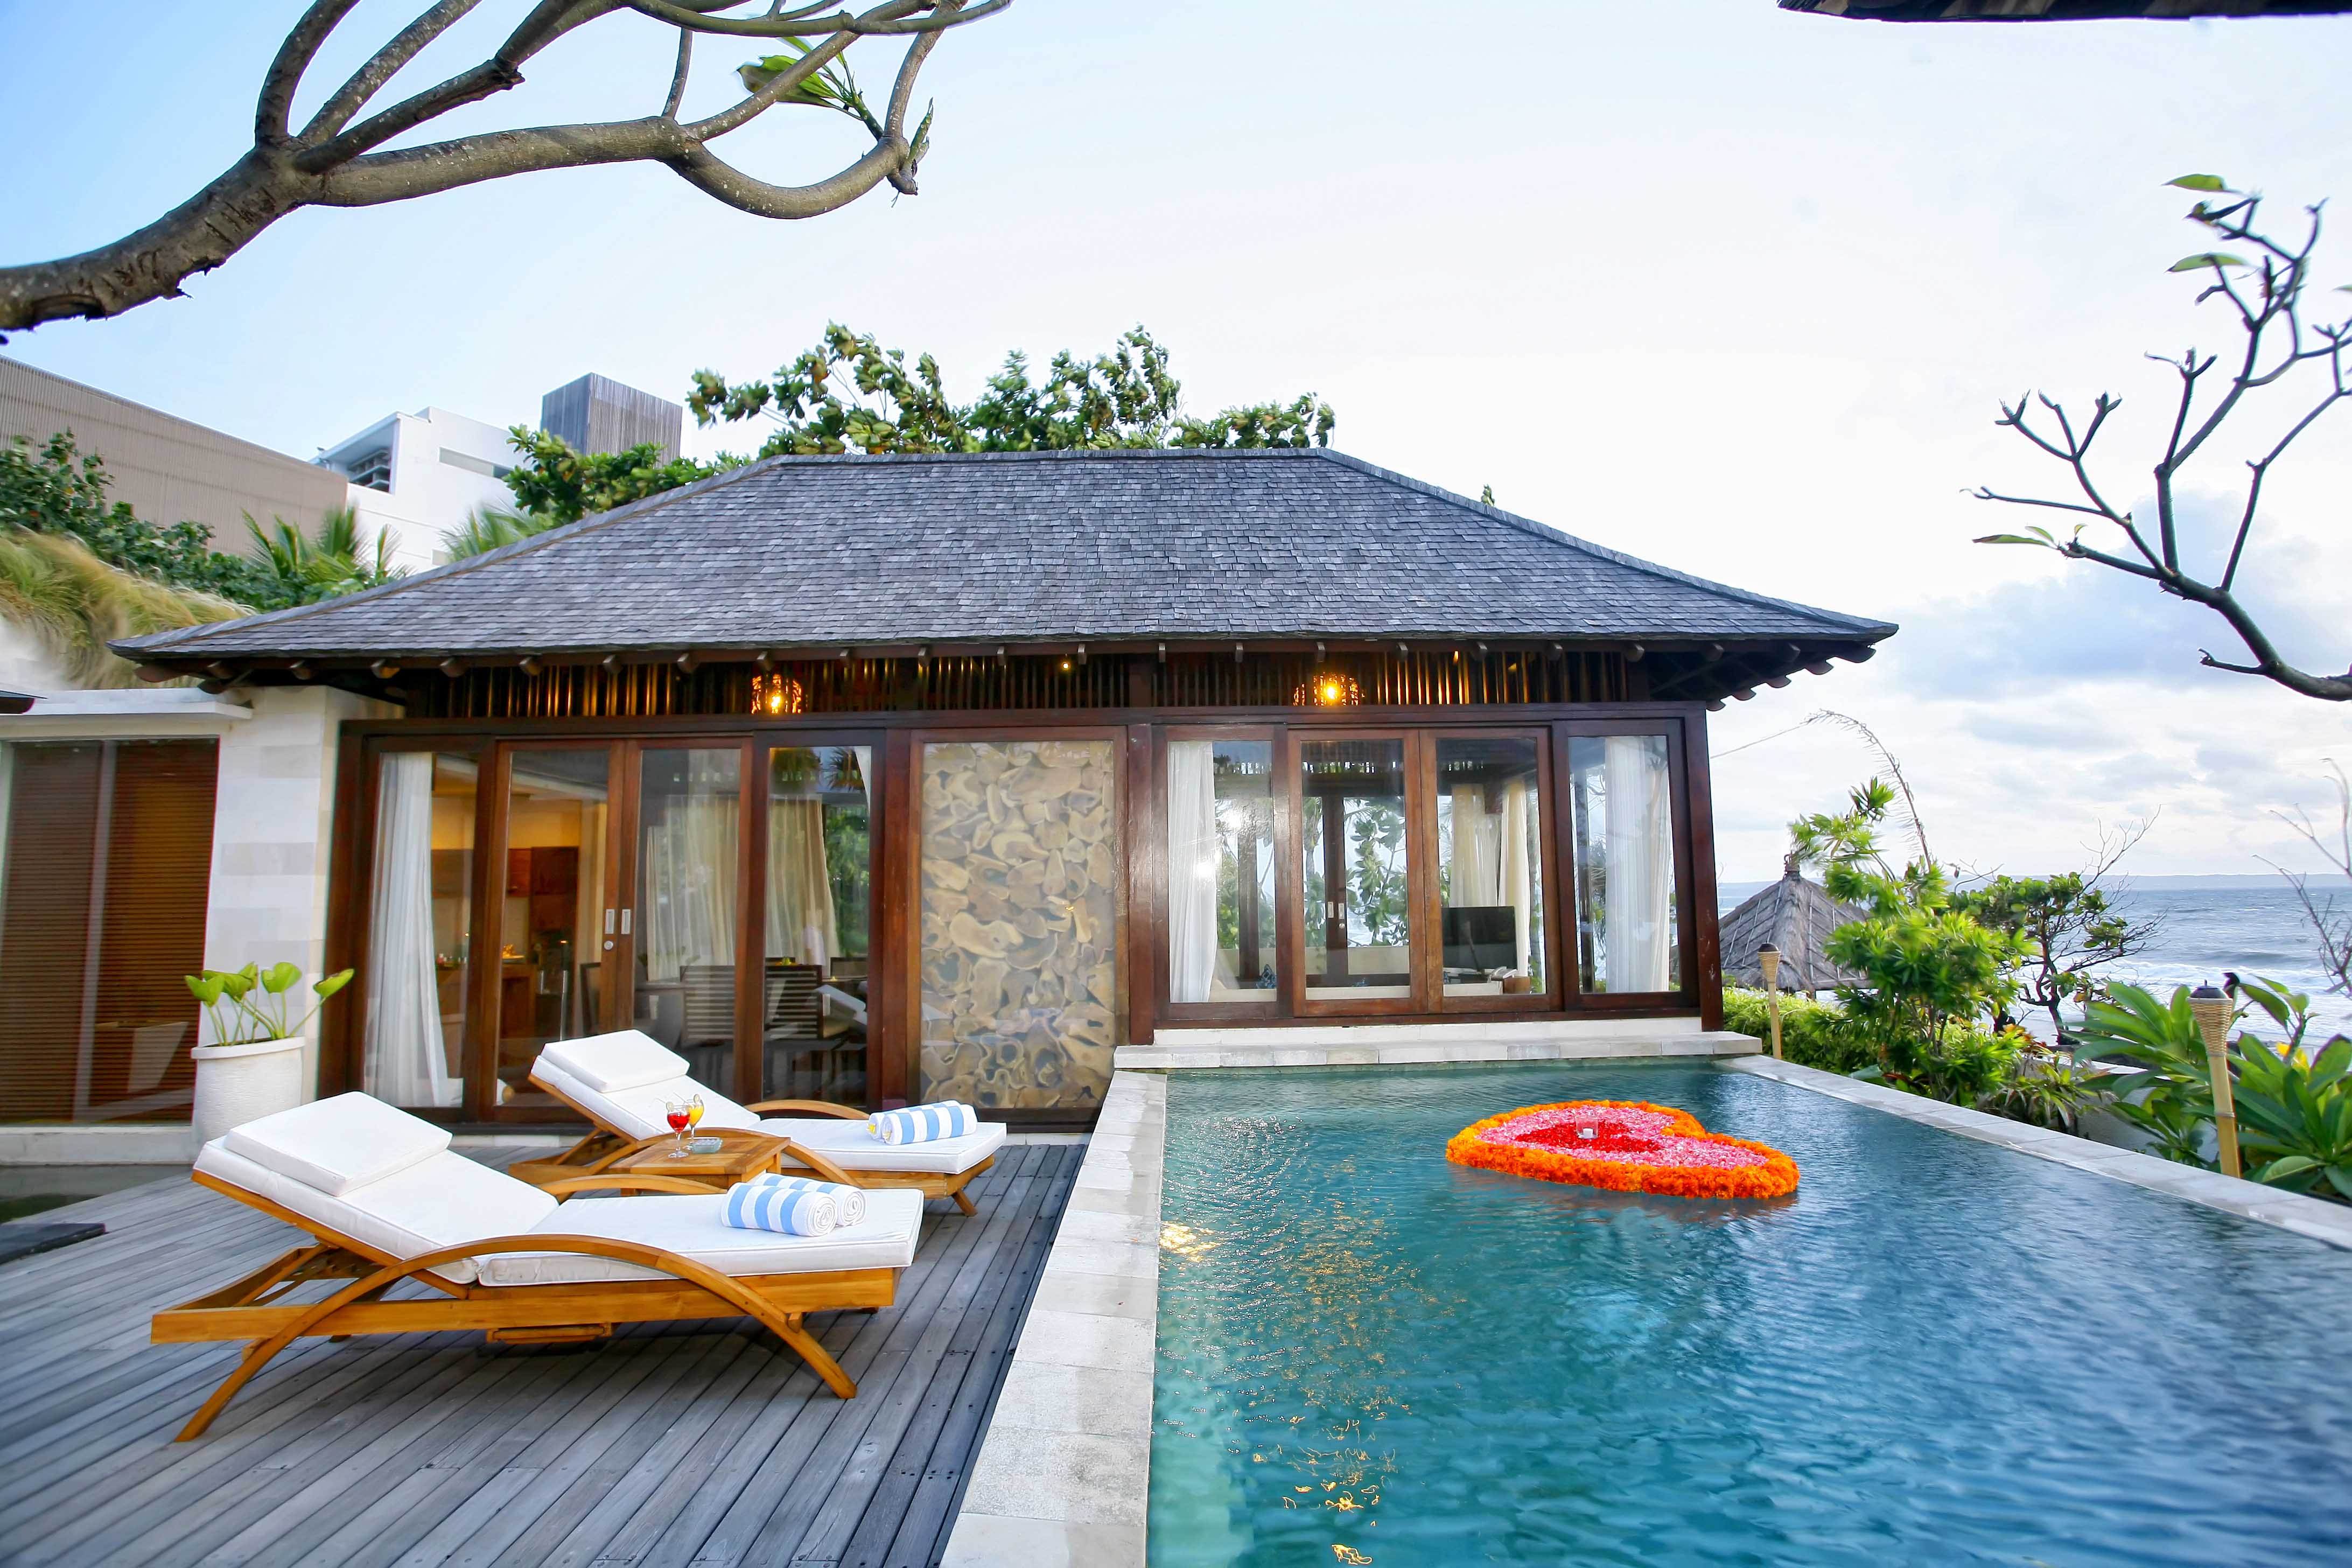 Top 6 Best Villas In Bali | Bali Villas With Private Pool - Pickyourtrail